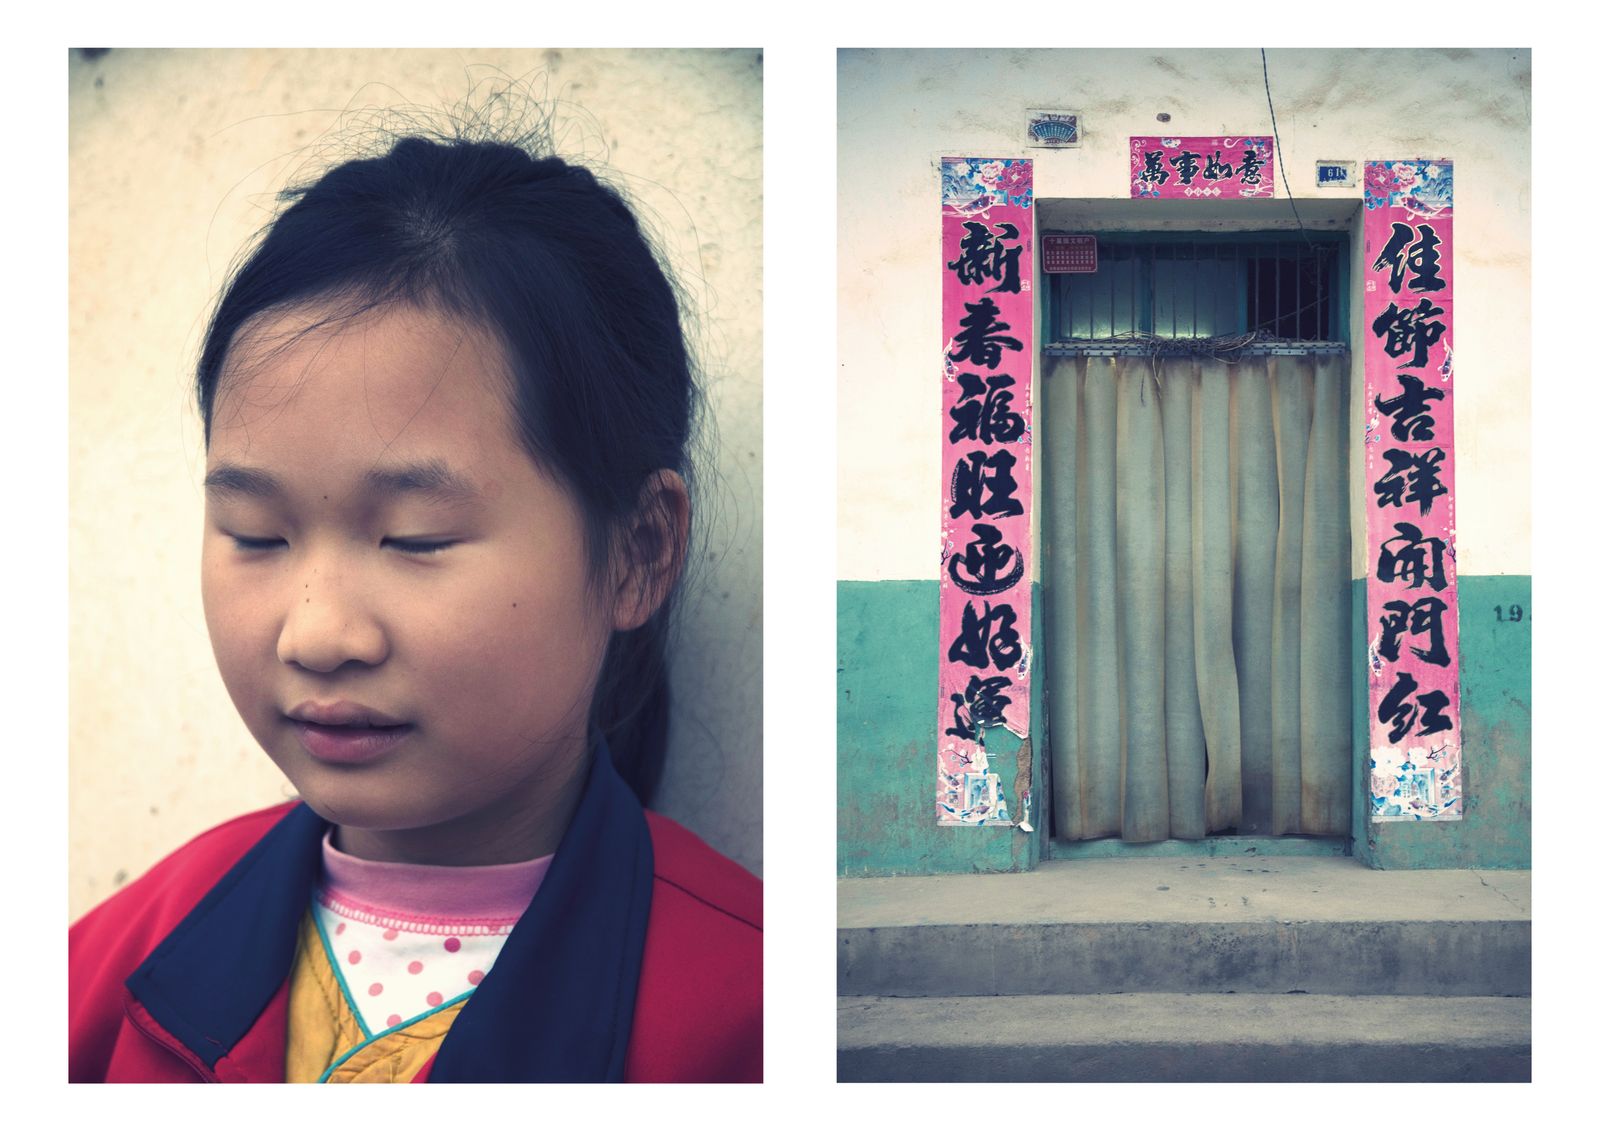 © Ayline Olukman - Image from the Shangjin photography project